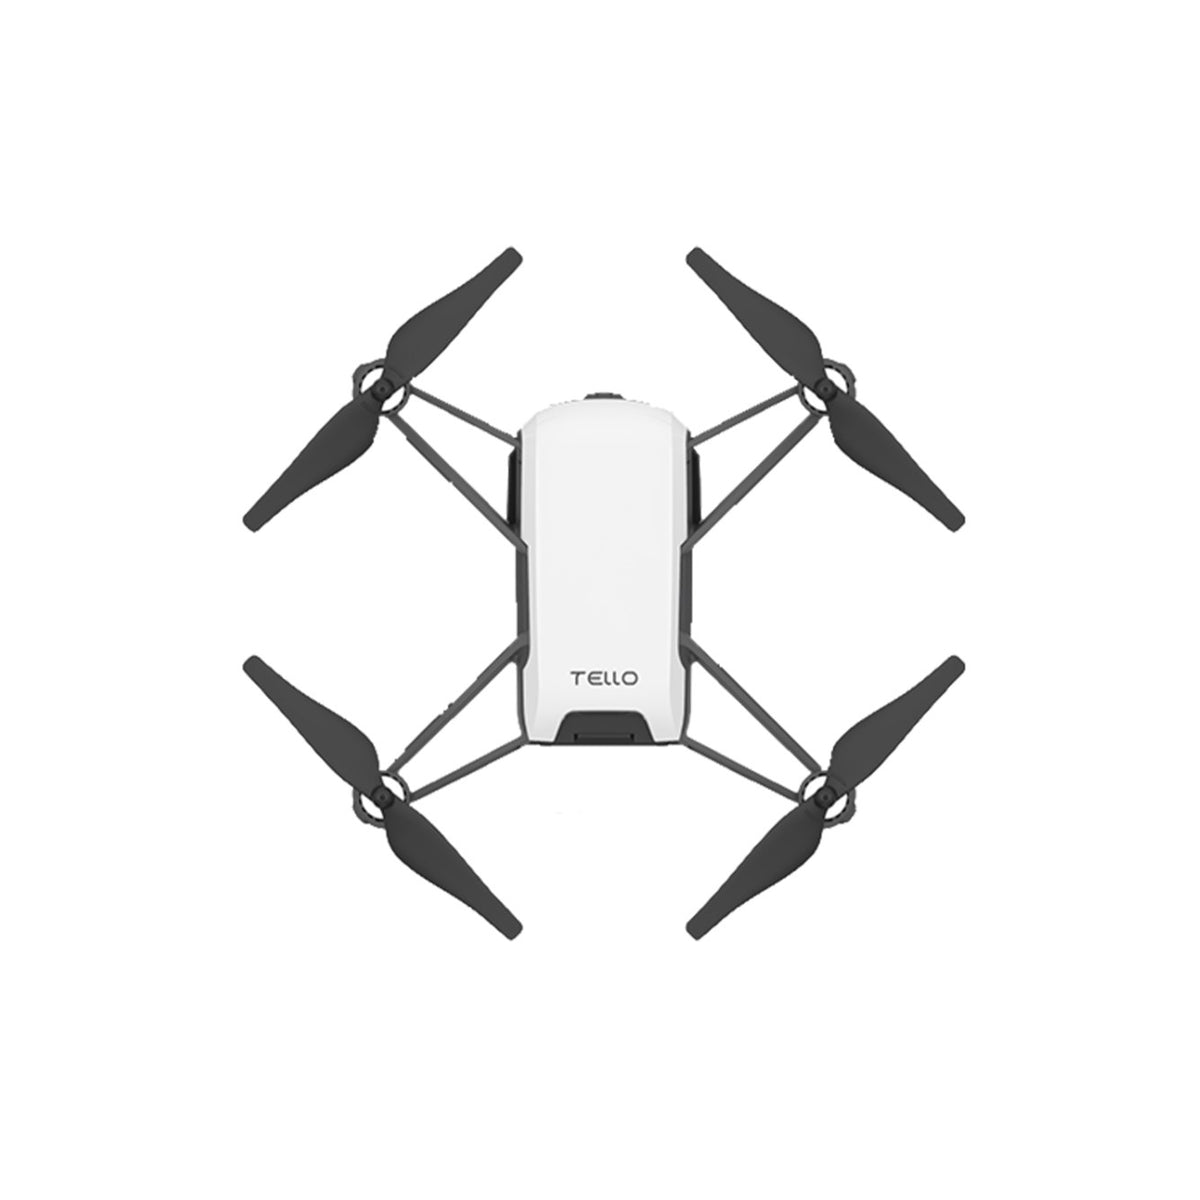 Tello intelligens mini drón (2 év garanciával) (Tello)-0